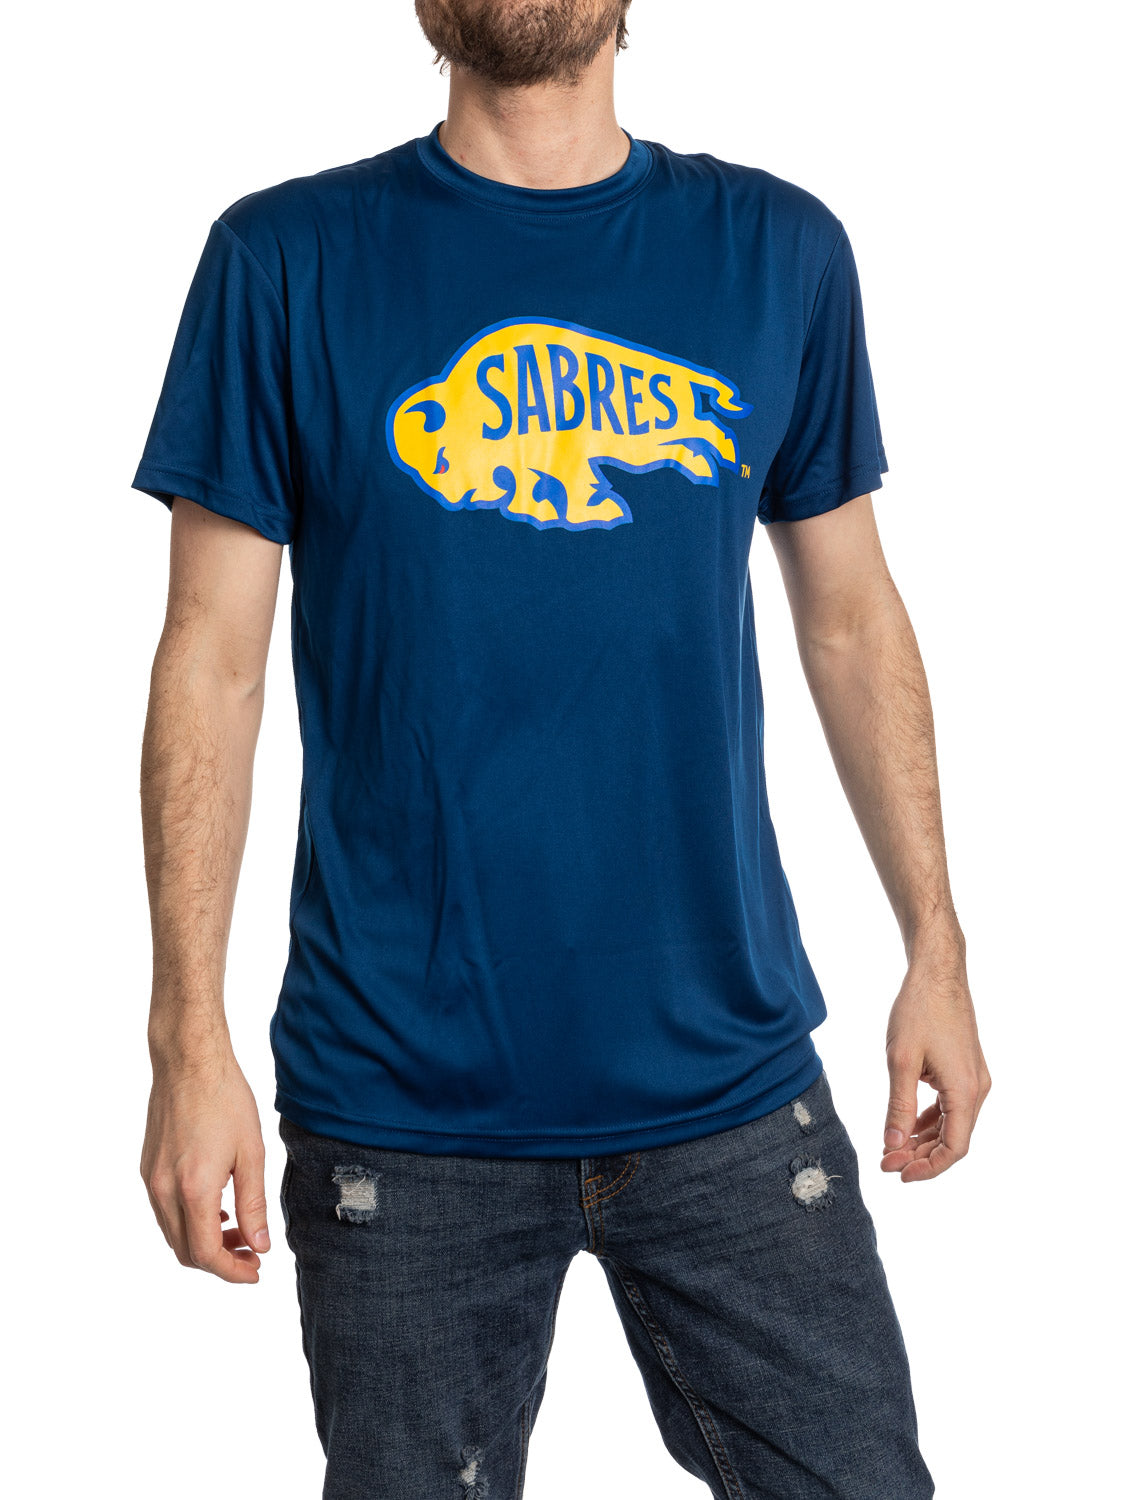 Buffalo Sabres Short Sleeve Rashguard T Shirt - Alternate Logo